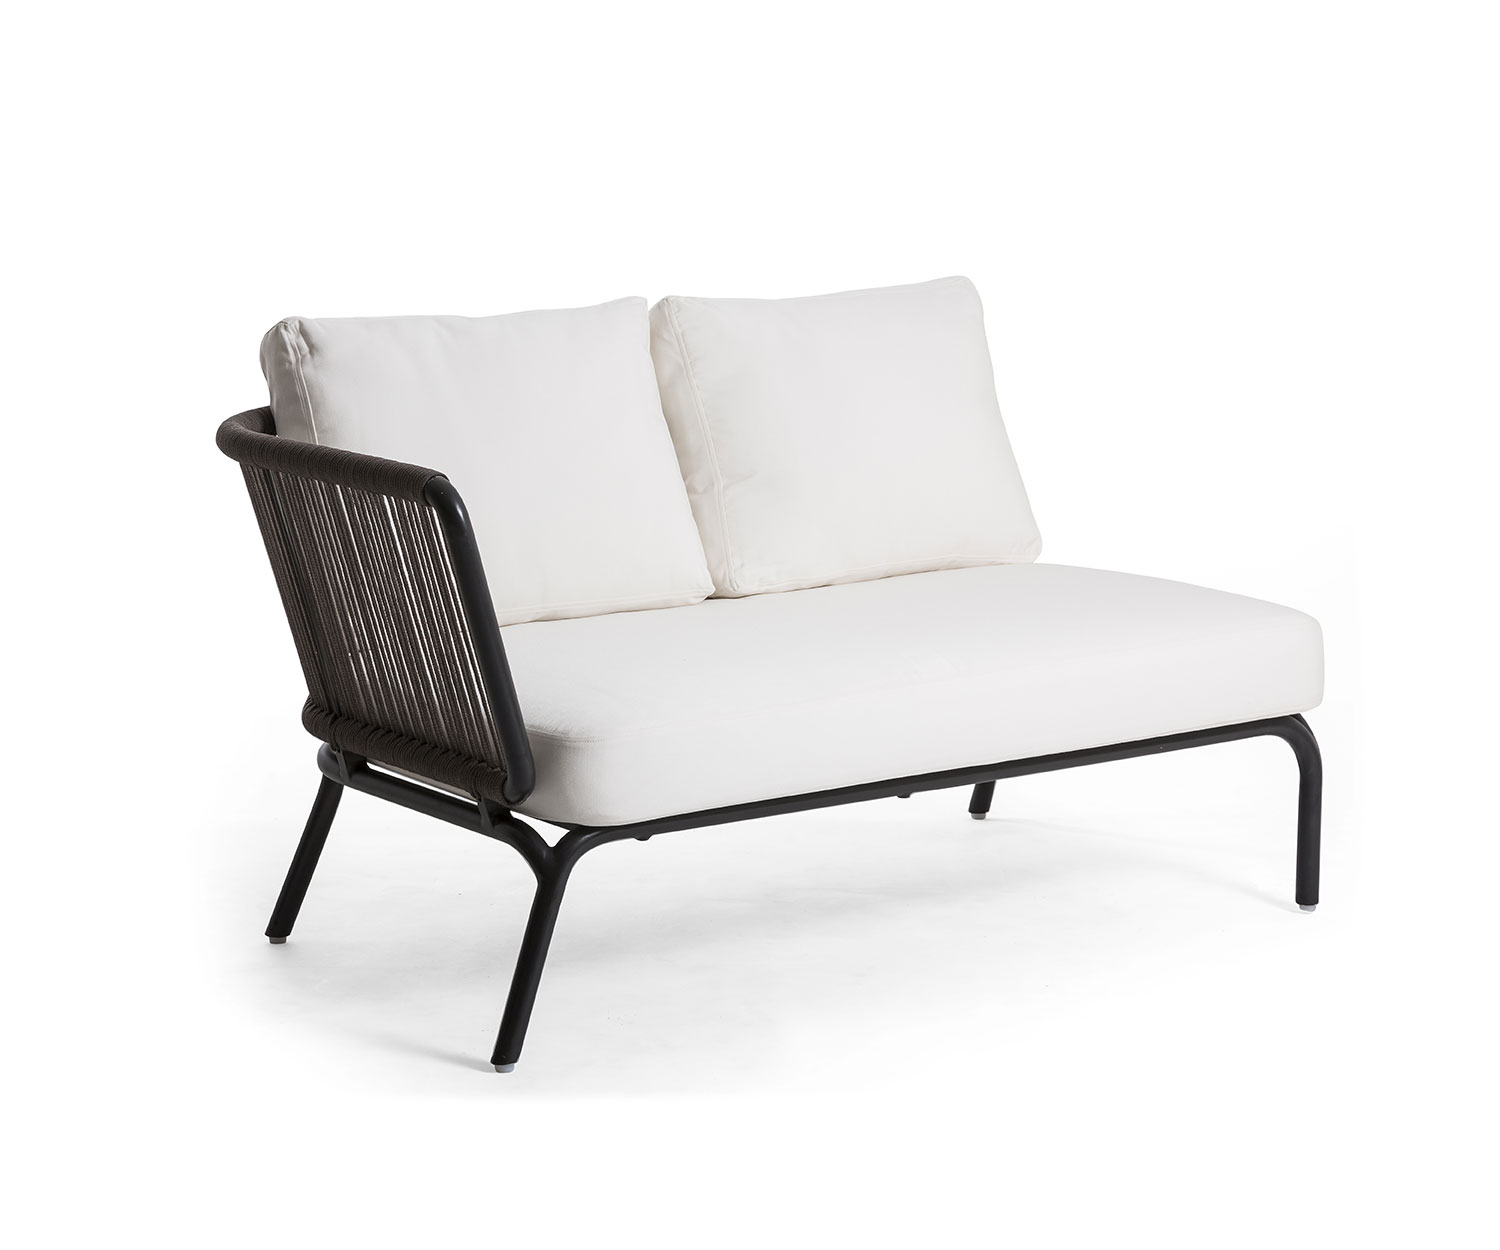 Oasiq Yland 2er Design Sofa mit handgewobener Seilbespannung in Taupe Grau